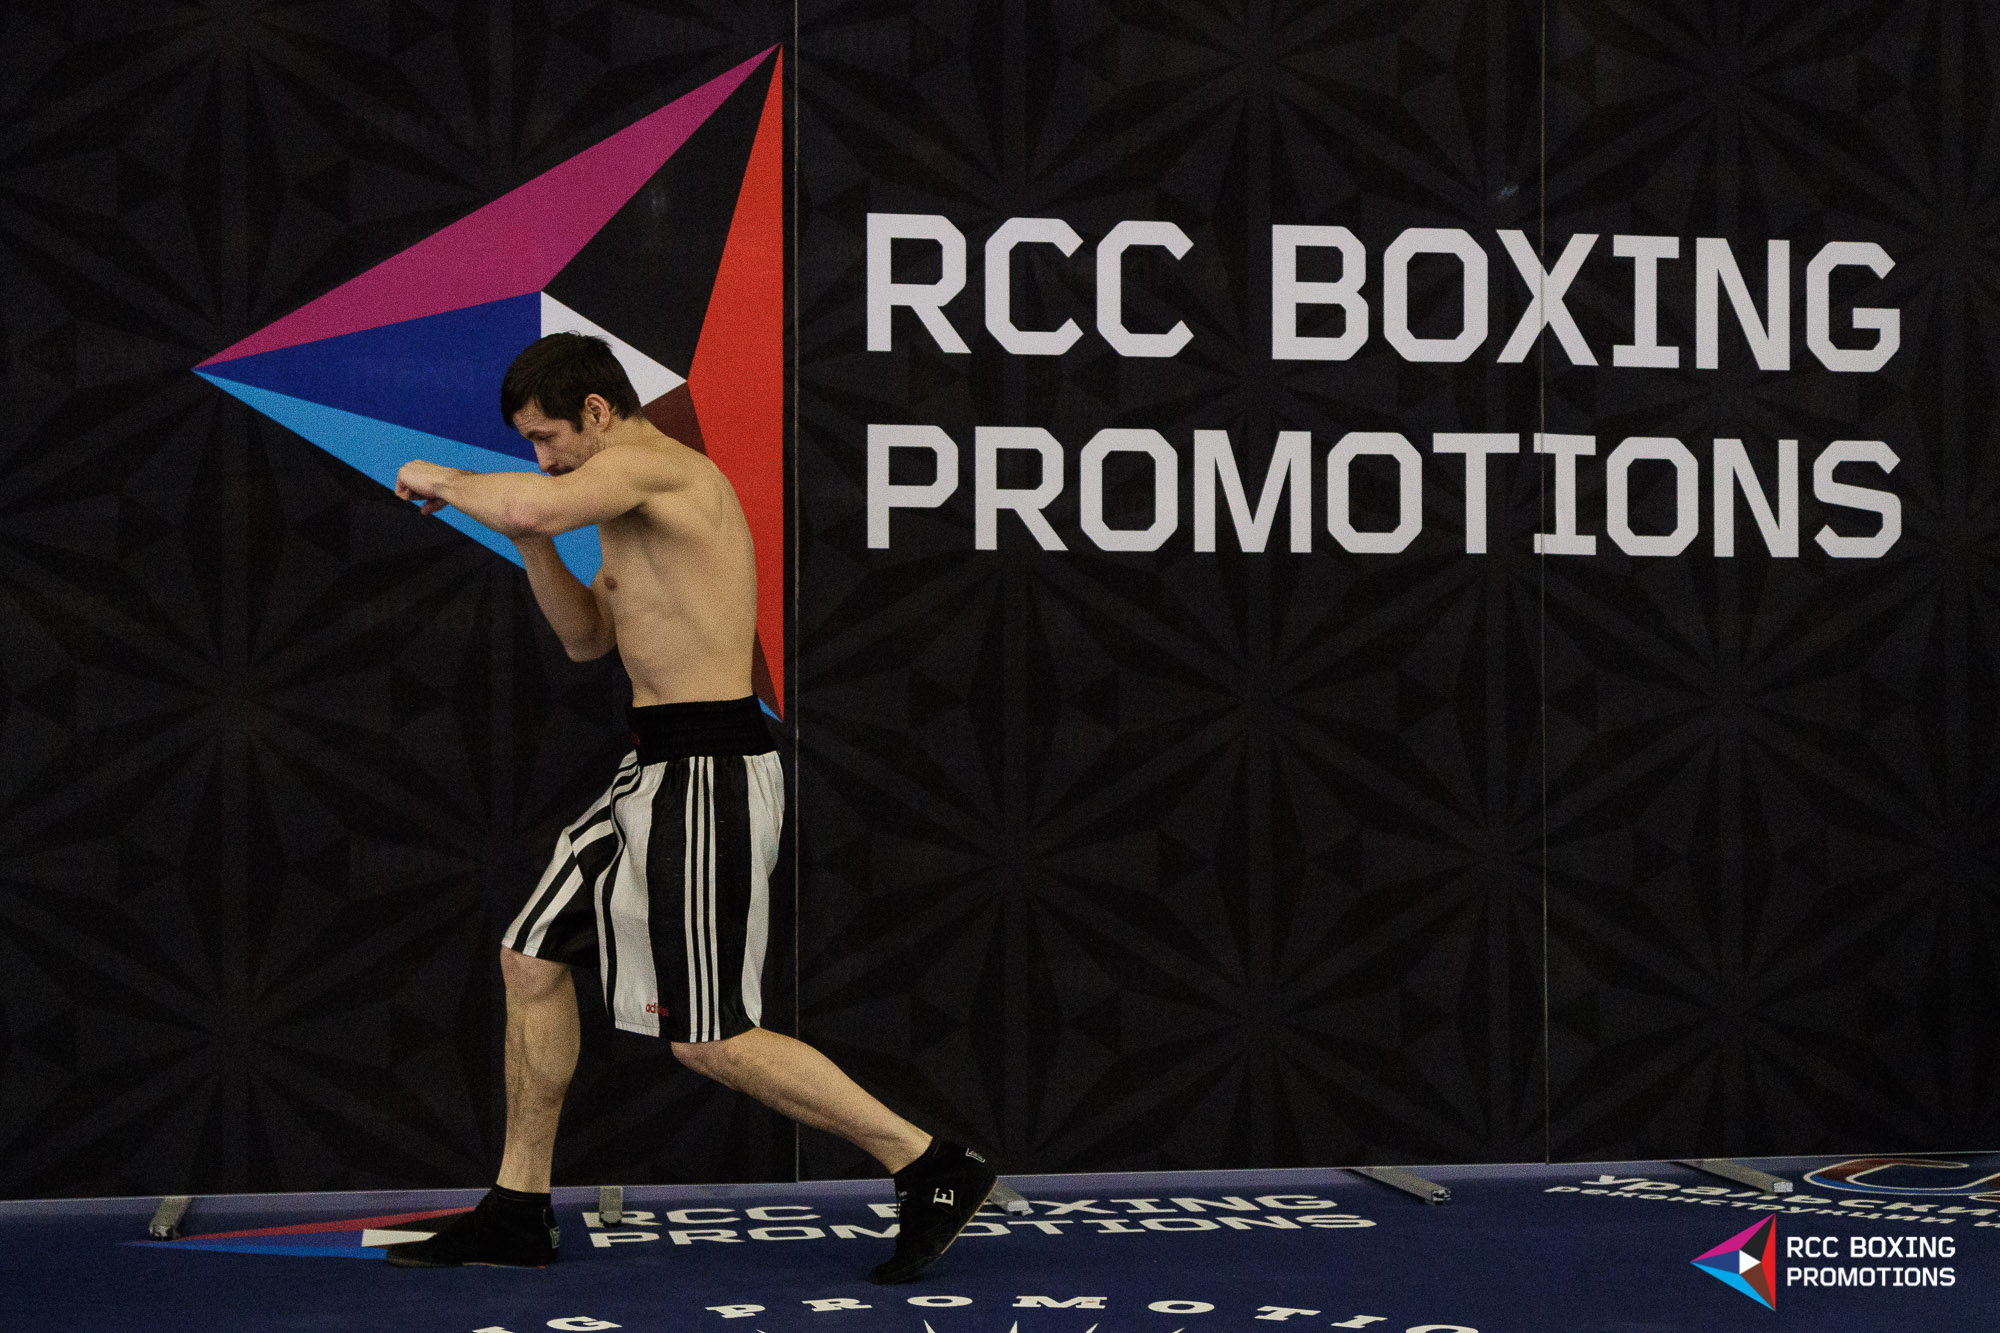 Boxing promotions. Рсс боксинг. RCC Boxing promotions. RCC бокс. RCC Boxing одежда.